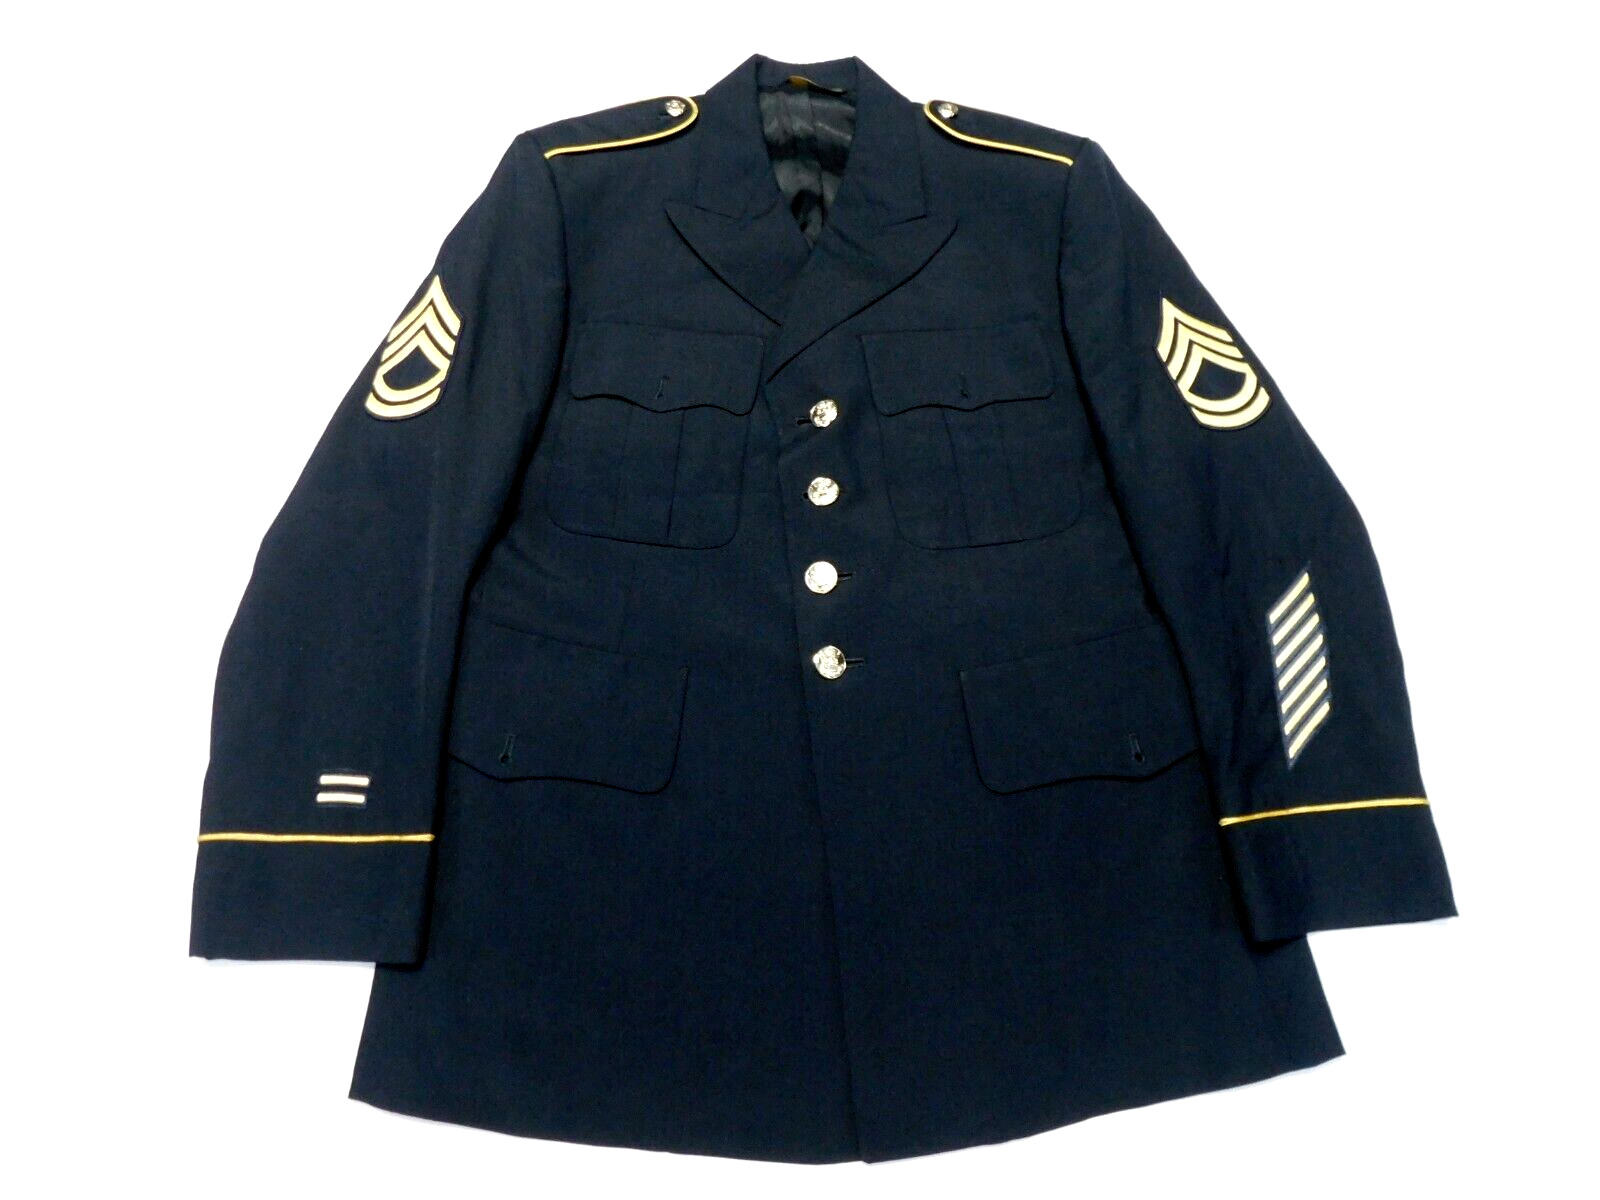 US Army ASU Coat 43 Short Dress Blue 450 Poly/Wool Service SFC Jacket Uniform